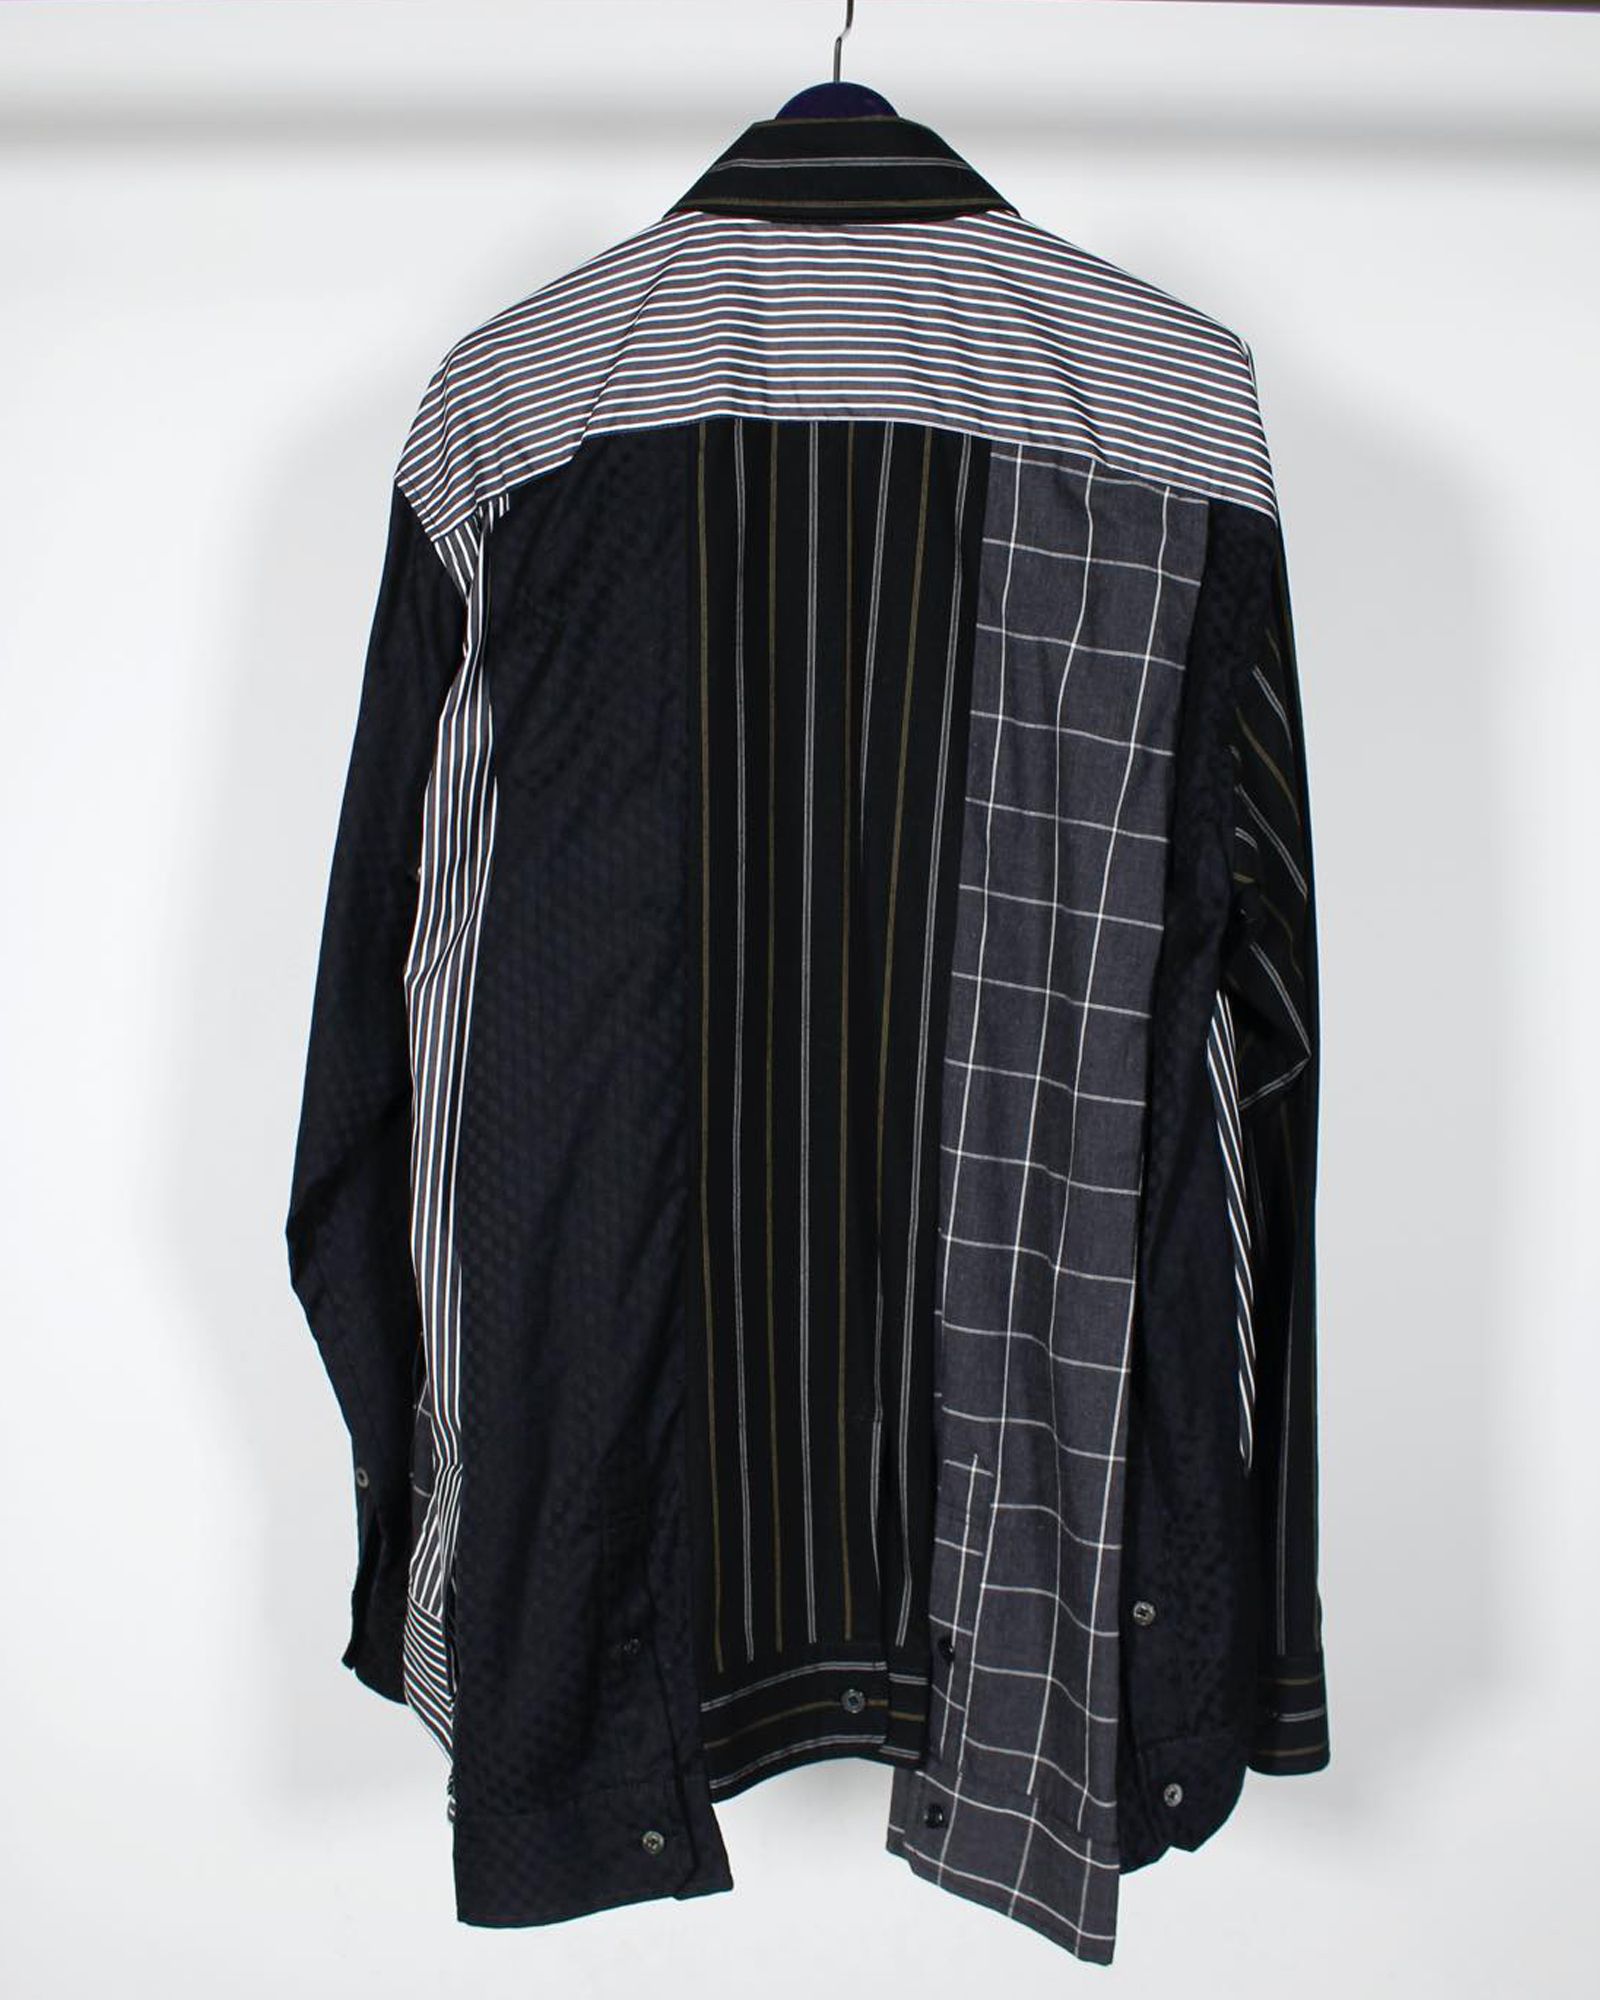 Maison MIHARA YASUHIRO - Sleeve Docking Shirt | fakejam